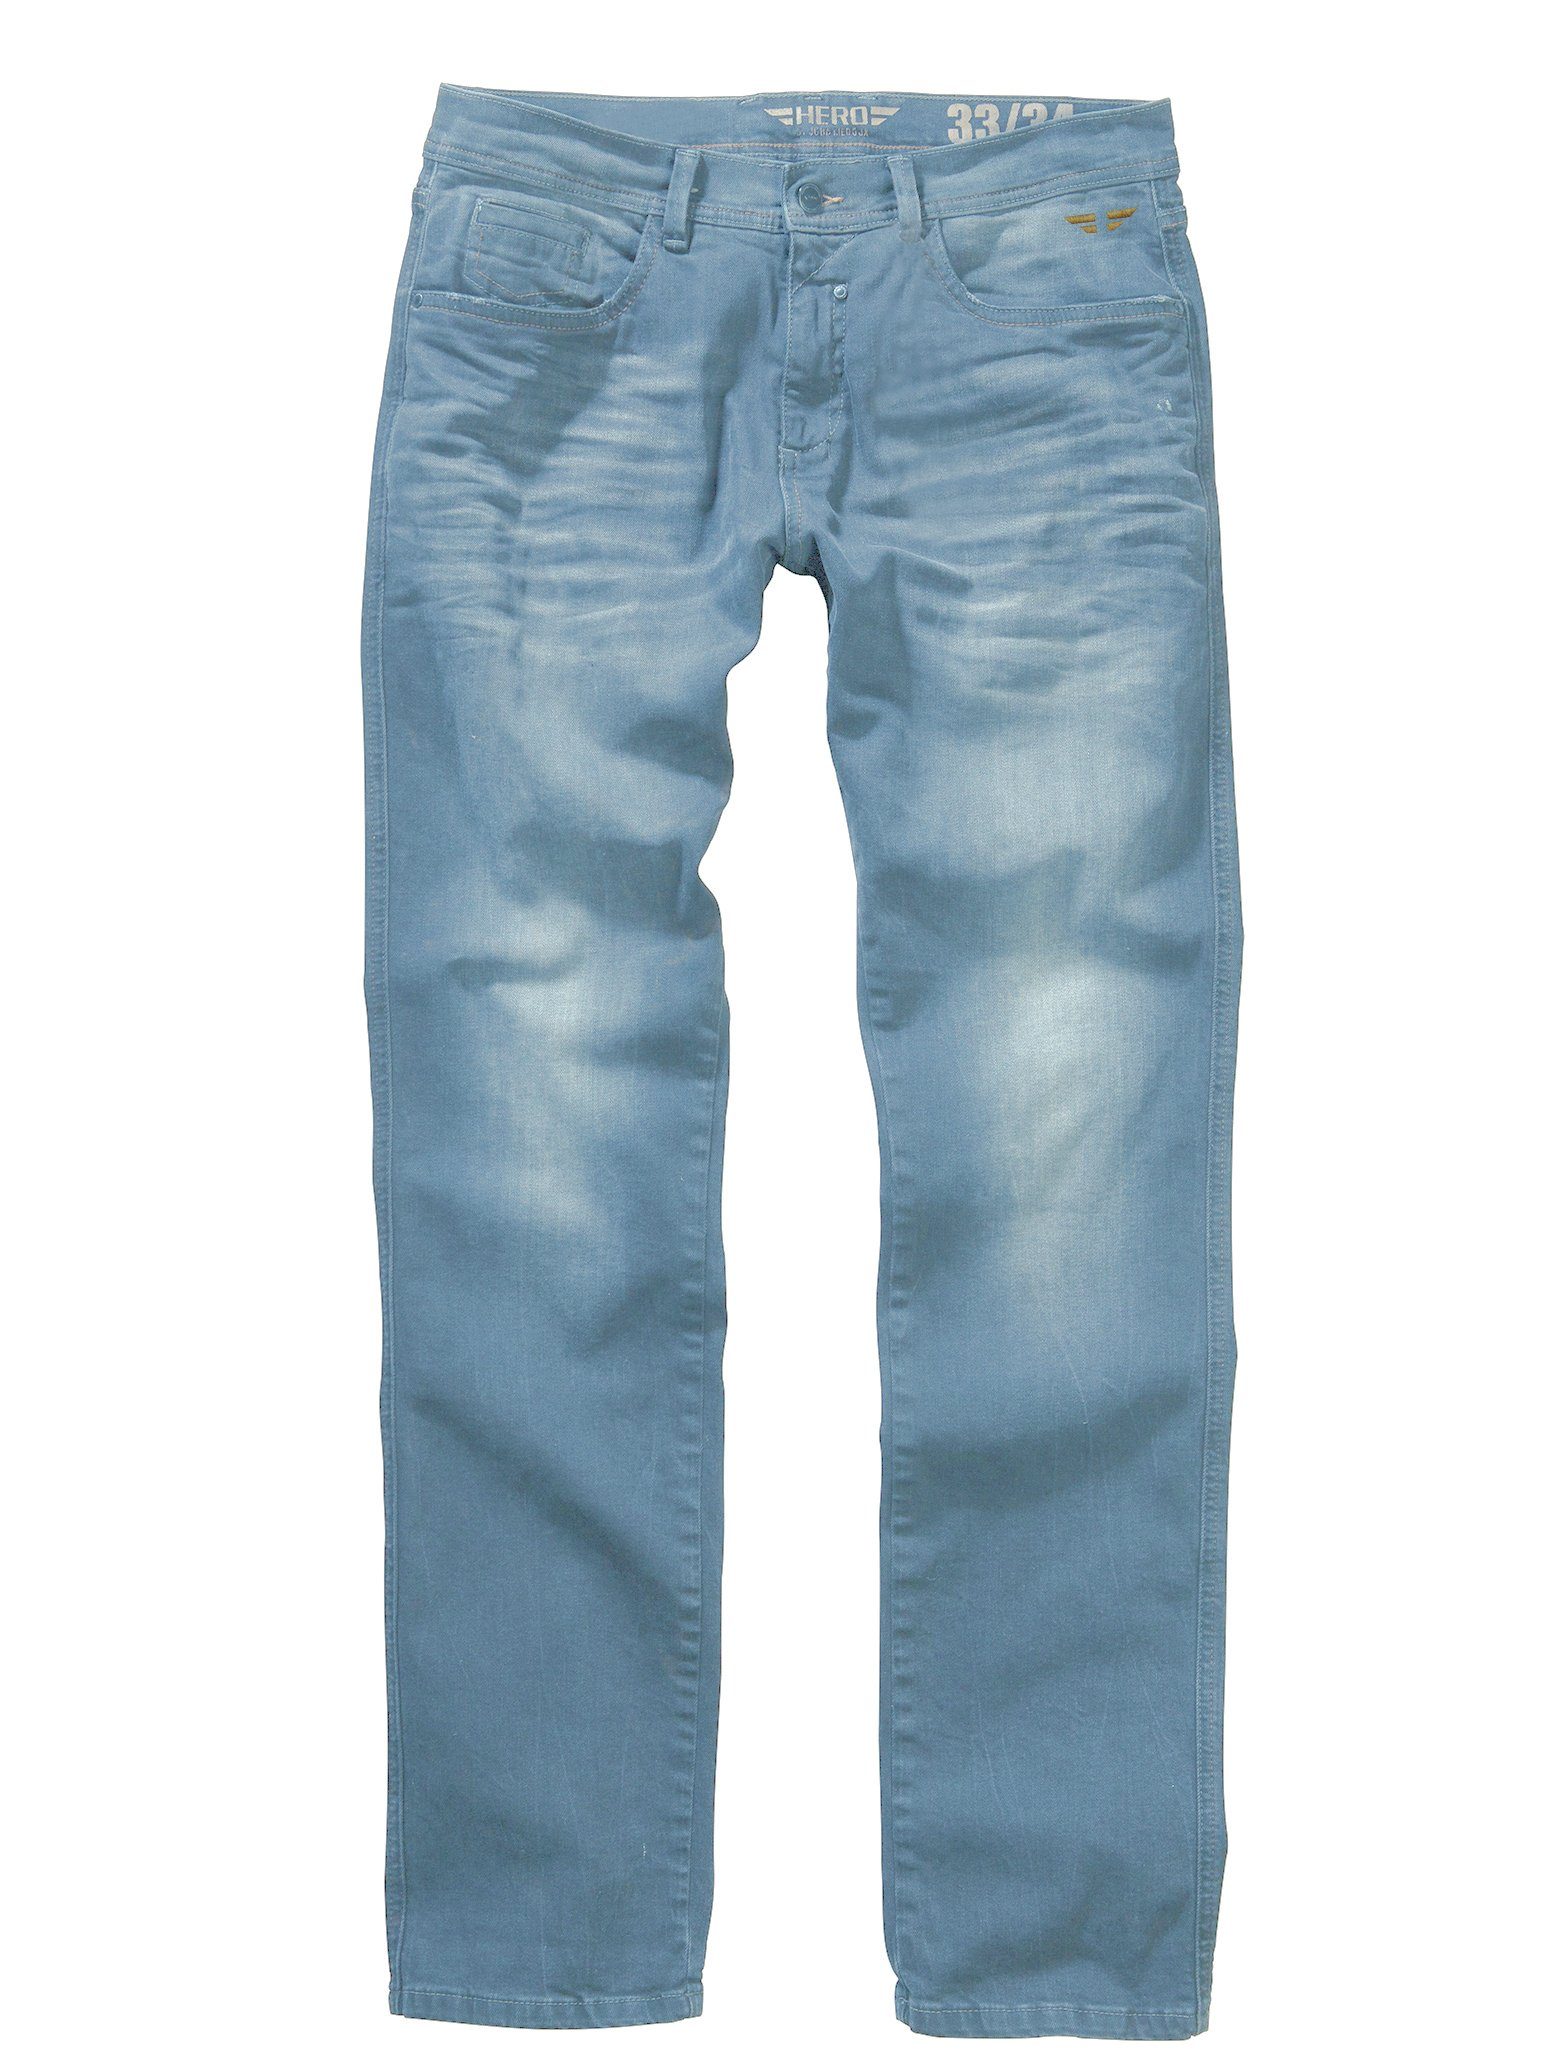 Versandkostenfreier Markt HERO by John Medoox Slim-fit-Jeans - Hose Blue HERO Slim - PORTLAND stone Stretch Straight Fit used Jeans